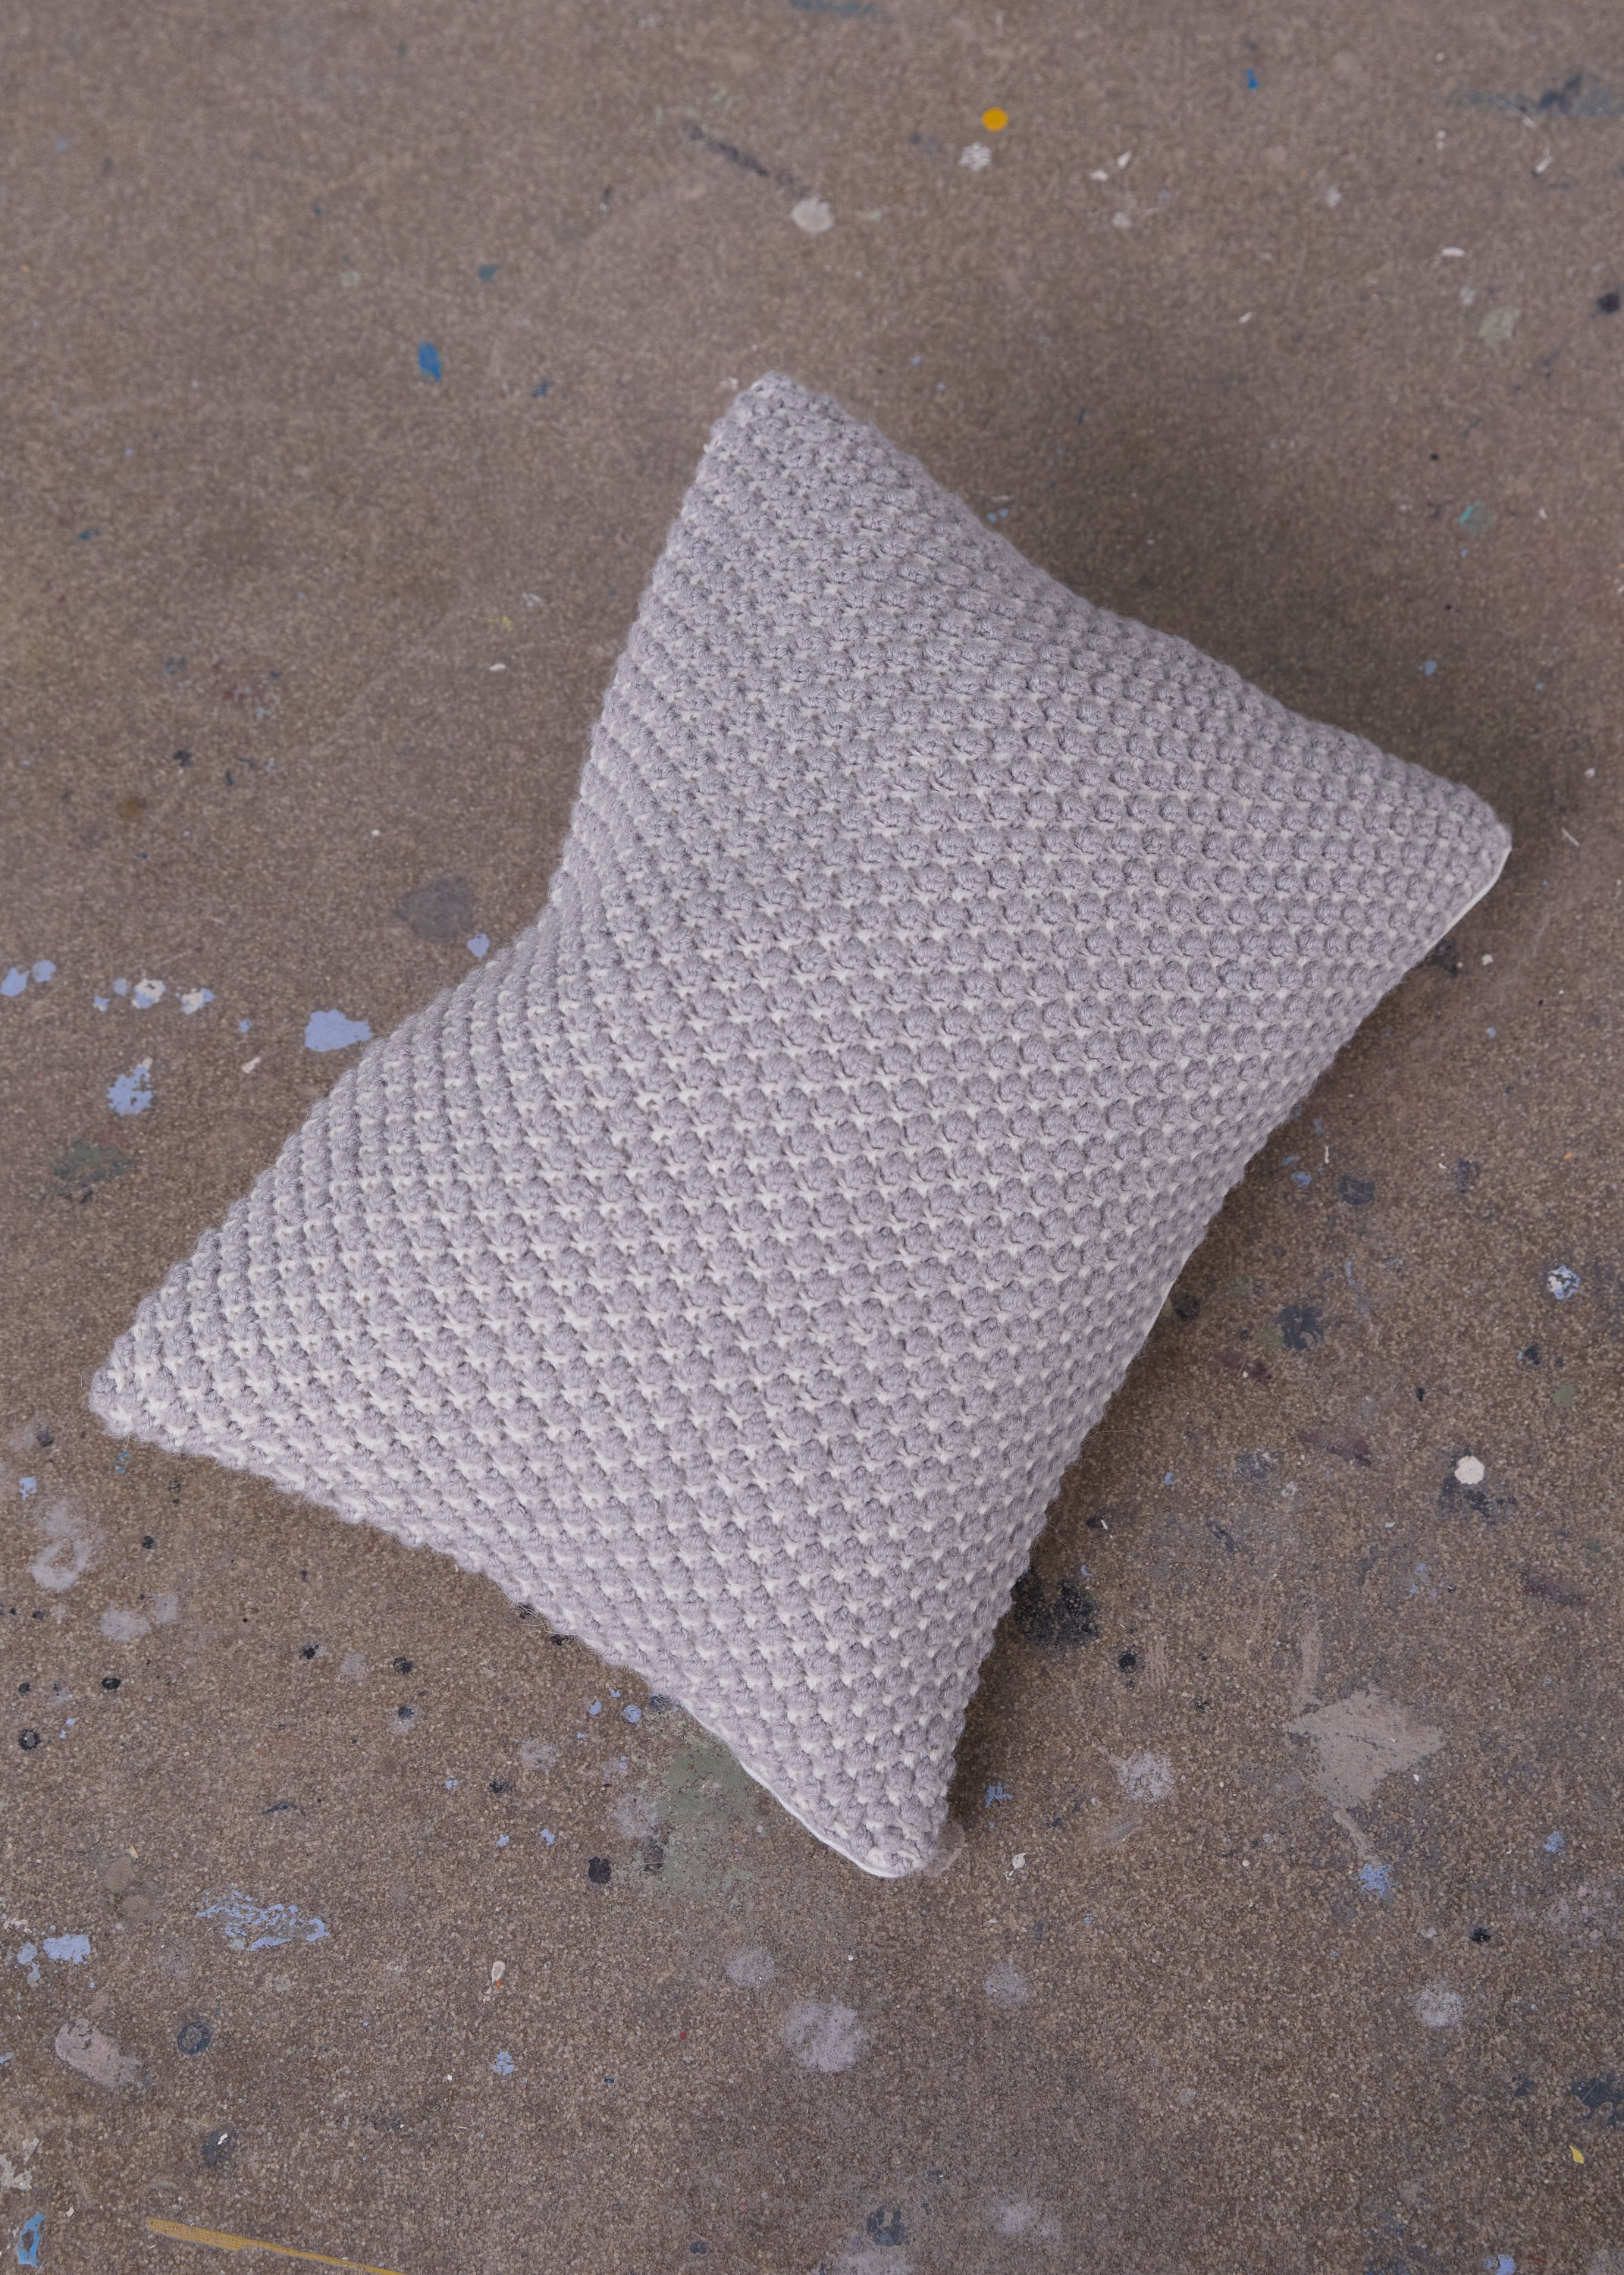 Kissen - Heather Classic pillow (30x40)